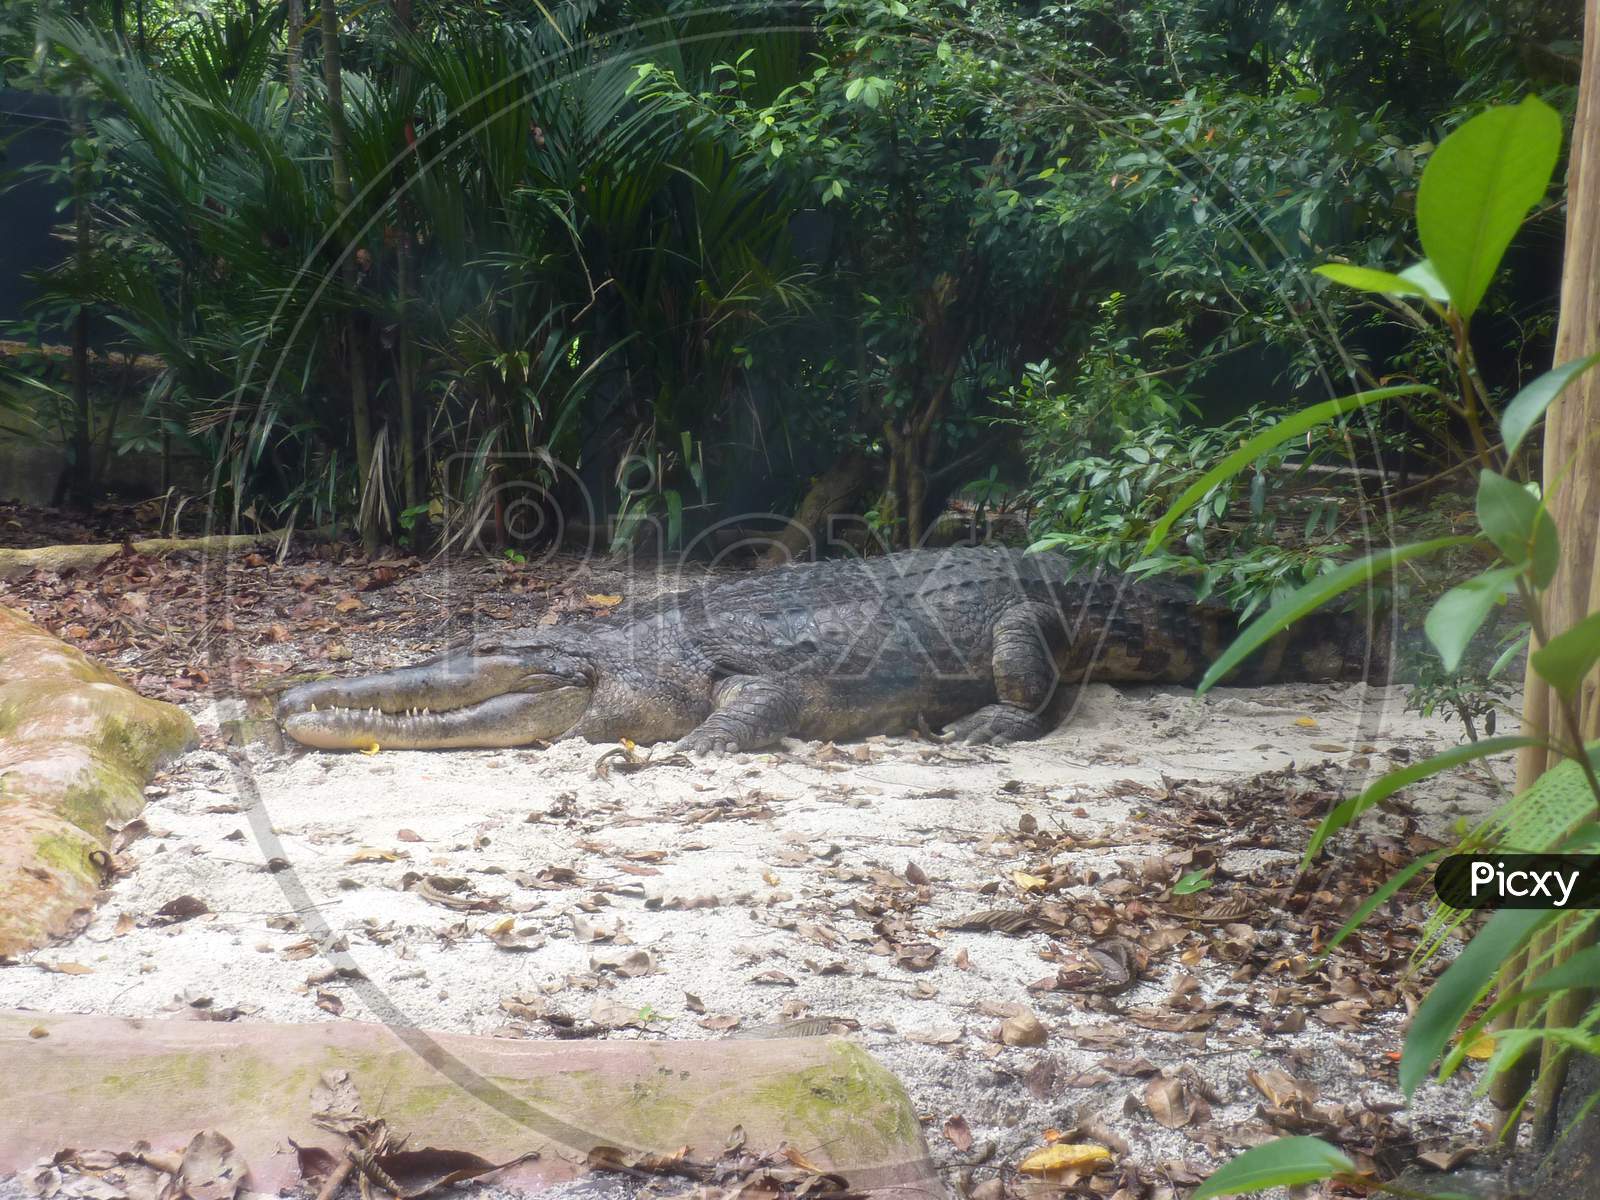 Crocodile in Singapore Zoo